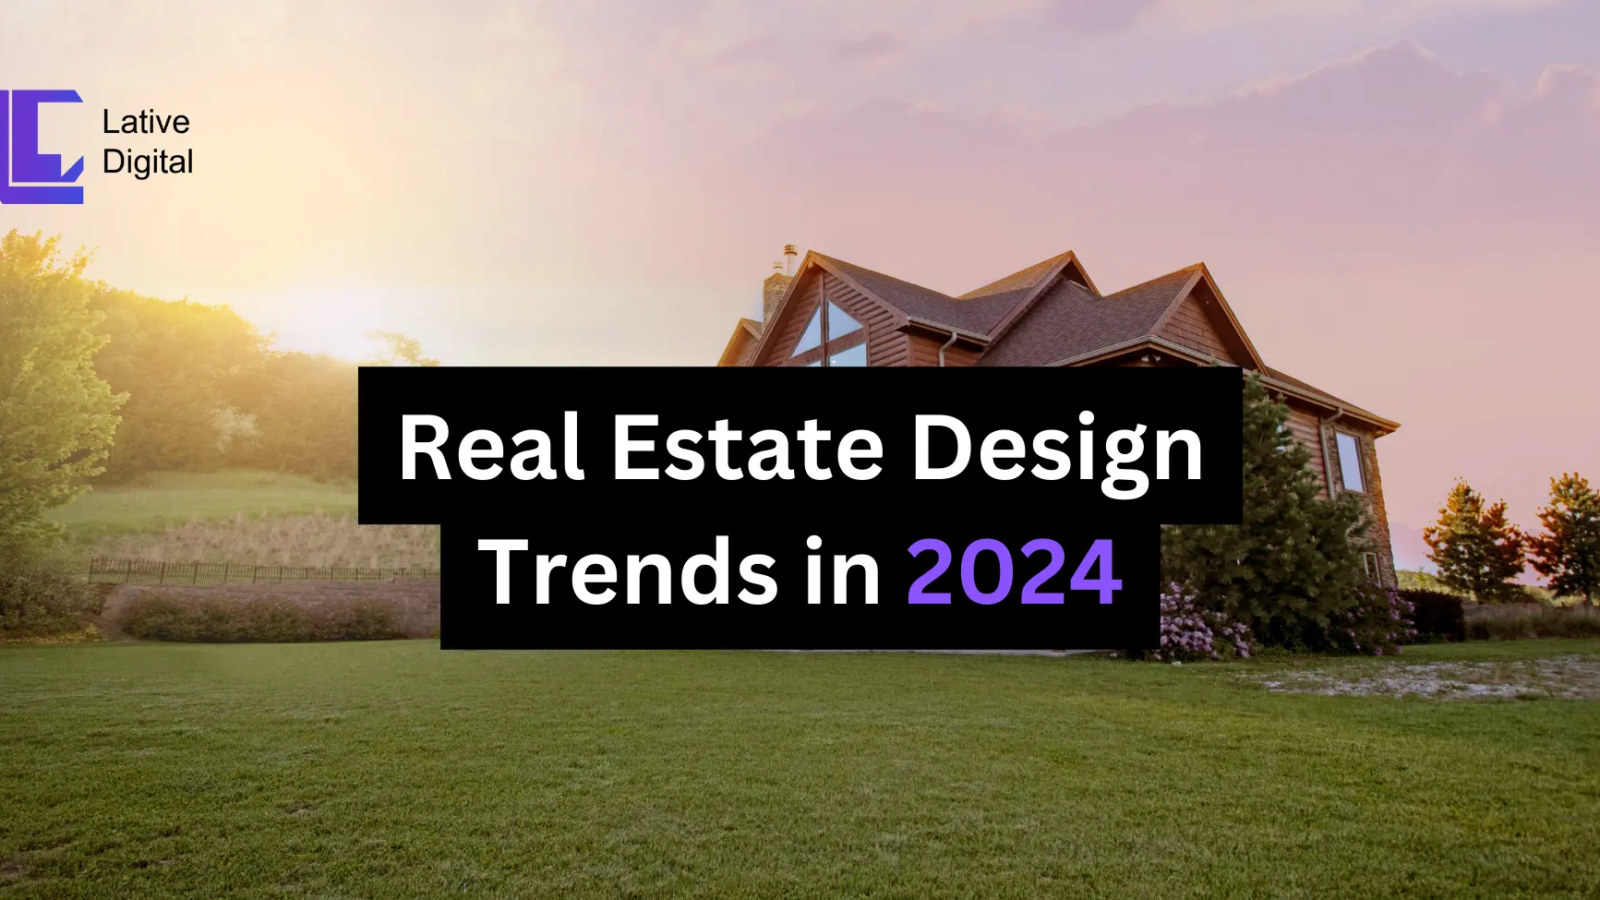 Real Estate Design Trends In 2024 1600x900.webp